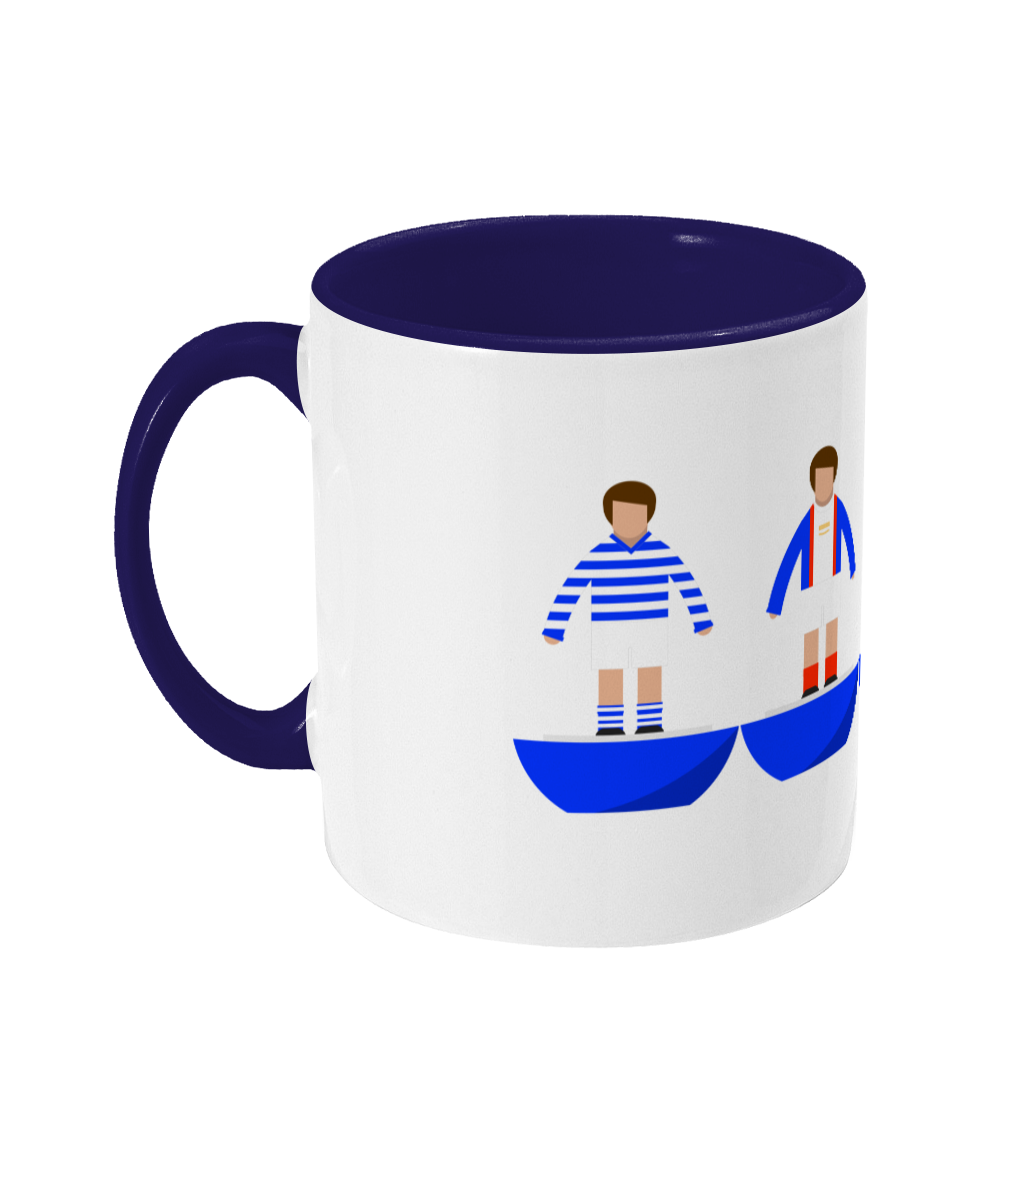 Football Kits 'Carlisle United combined' Mug